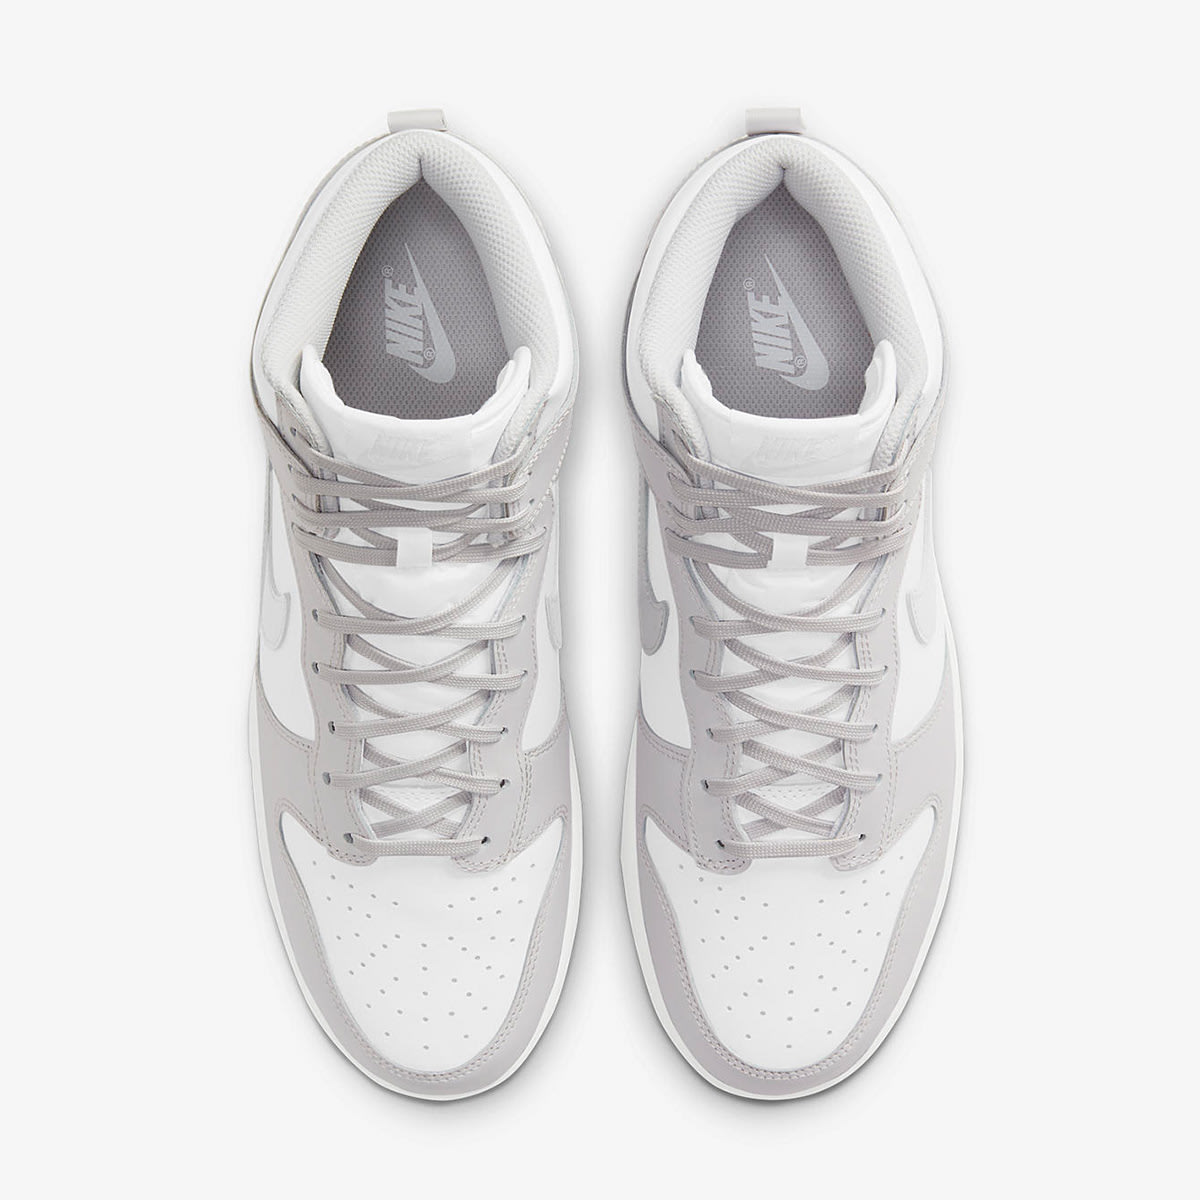 Nike Dunk Hi Retro (White, Vast Grey & White) | END. Launches